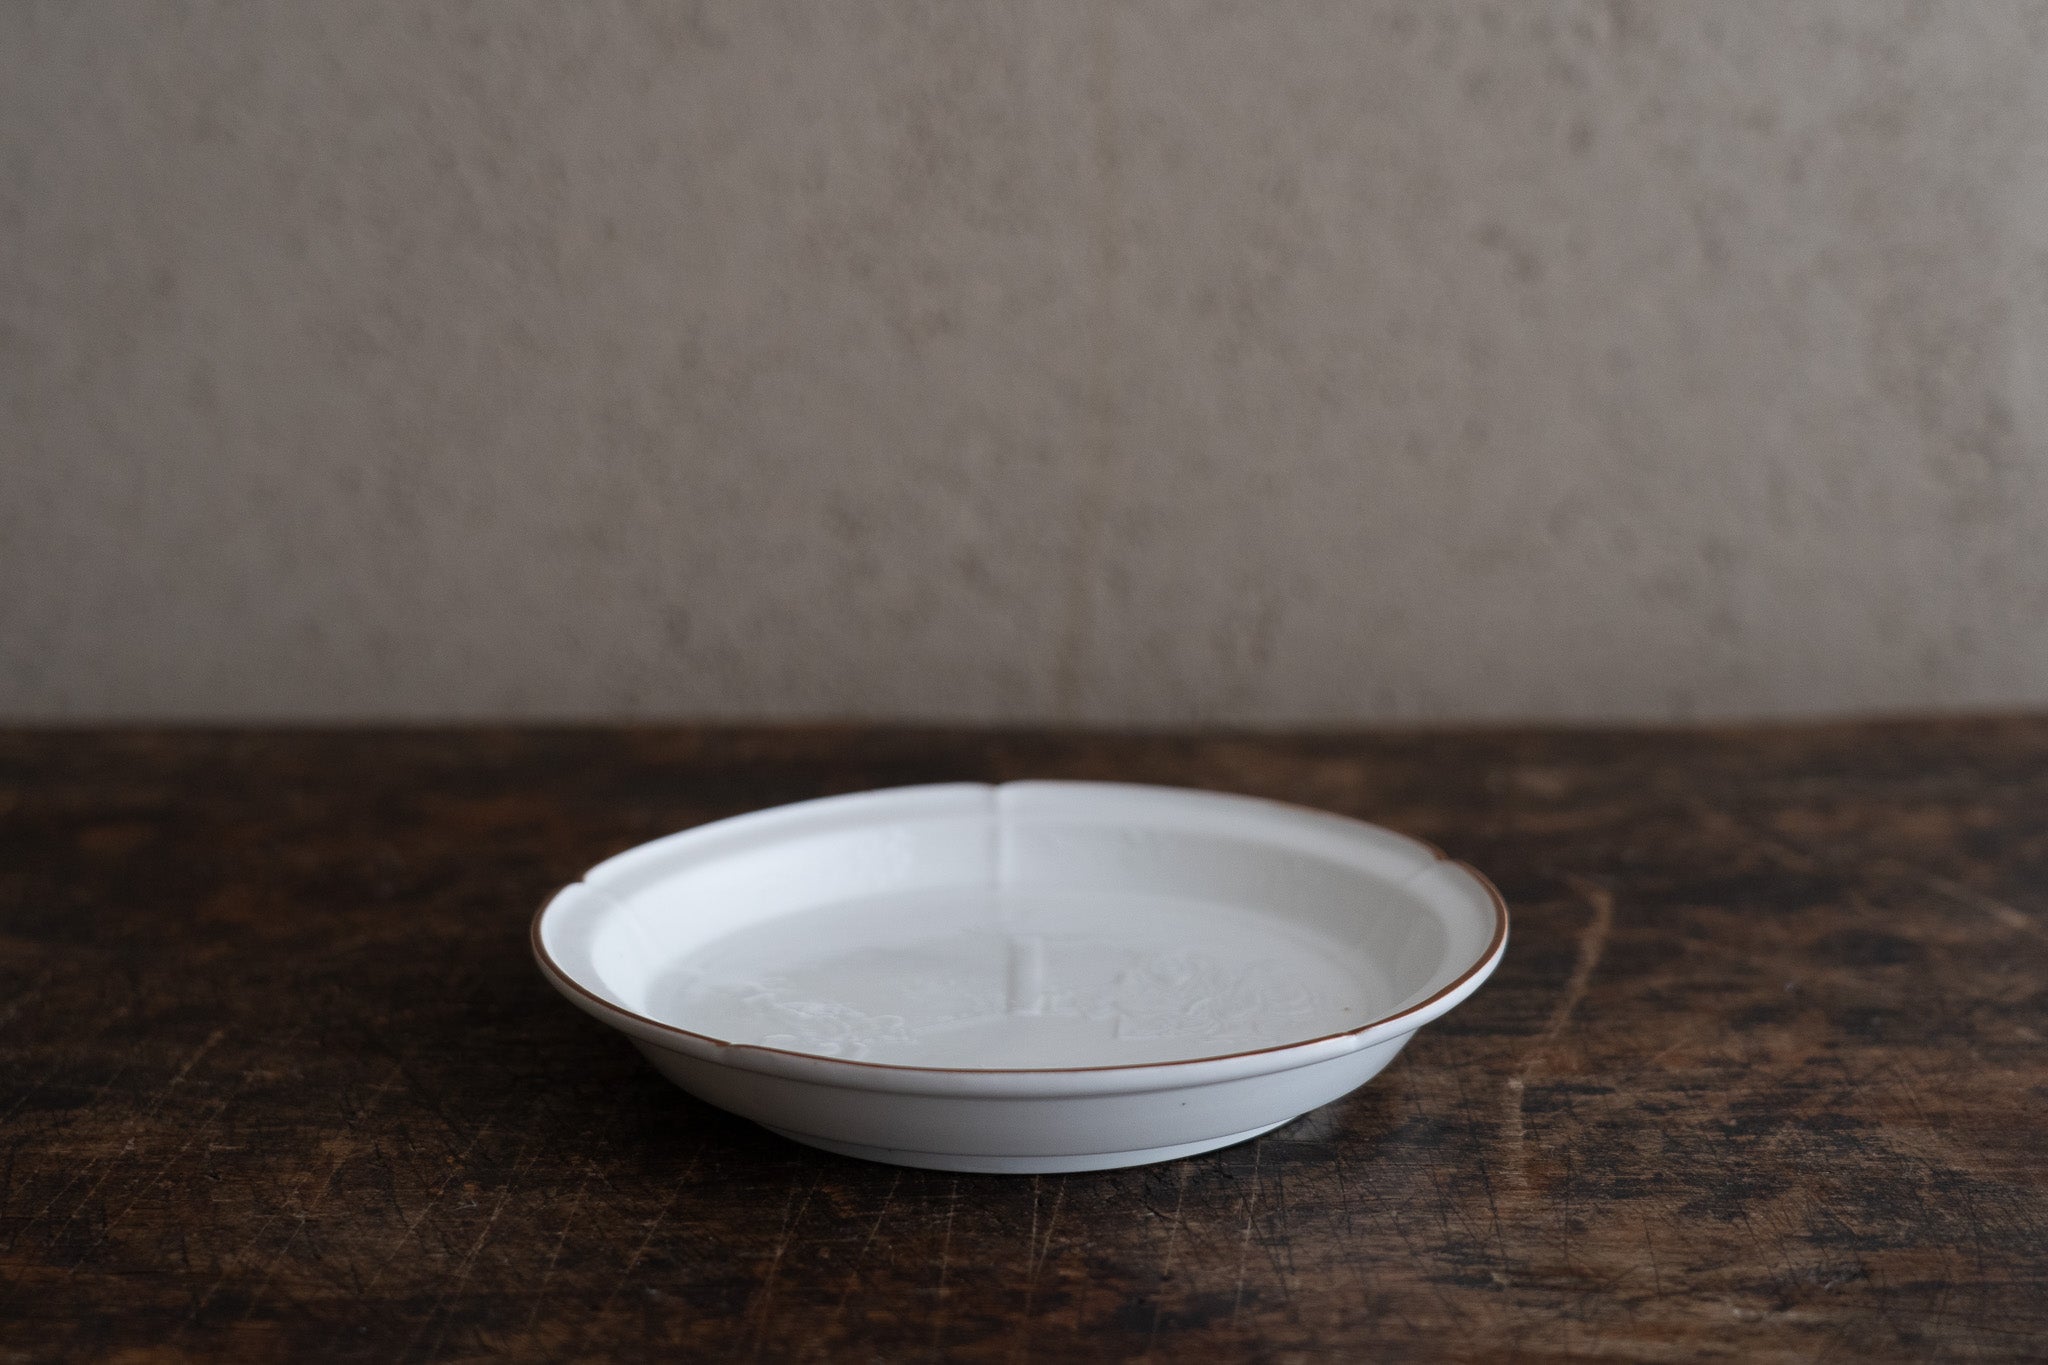 Kakiemon White Porcelain Flower Shaped Plate 【Good condition】